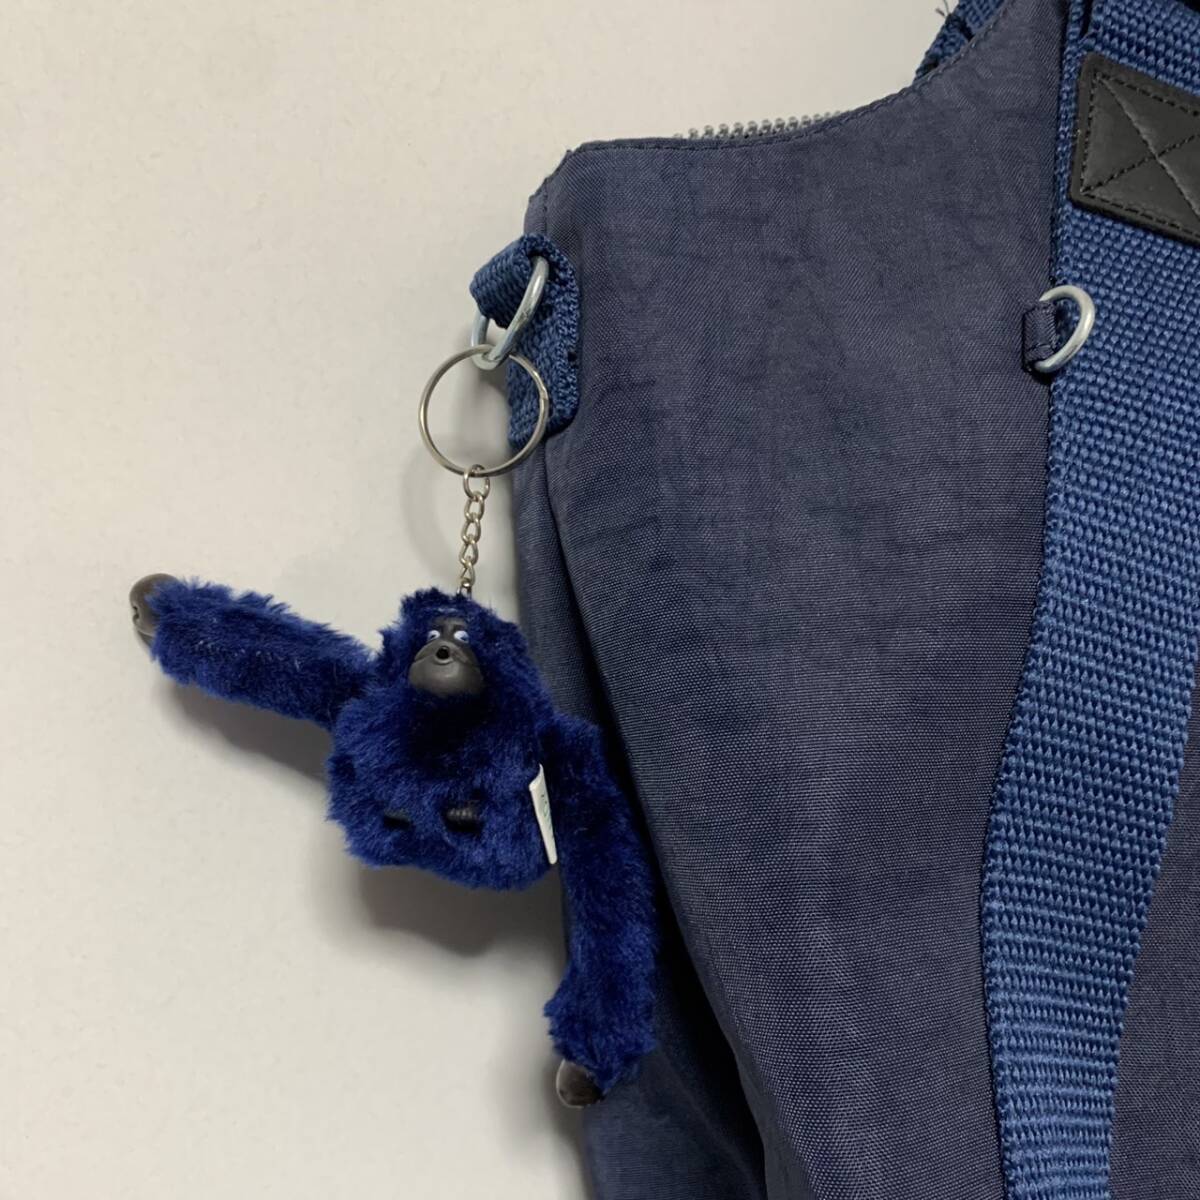  Kipling kipling Gorilla цепочка для ключей имеется сумка сумка на плечо ручная сумочка синий голубой (RB-011)